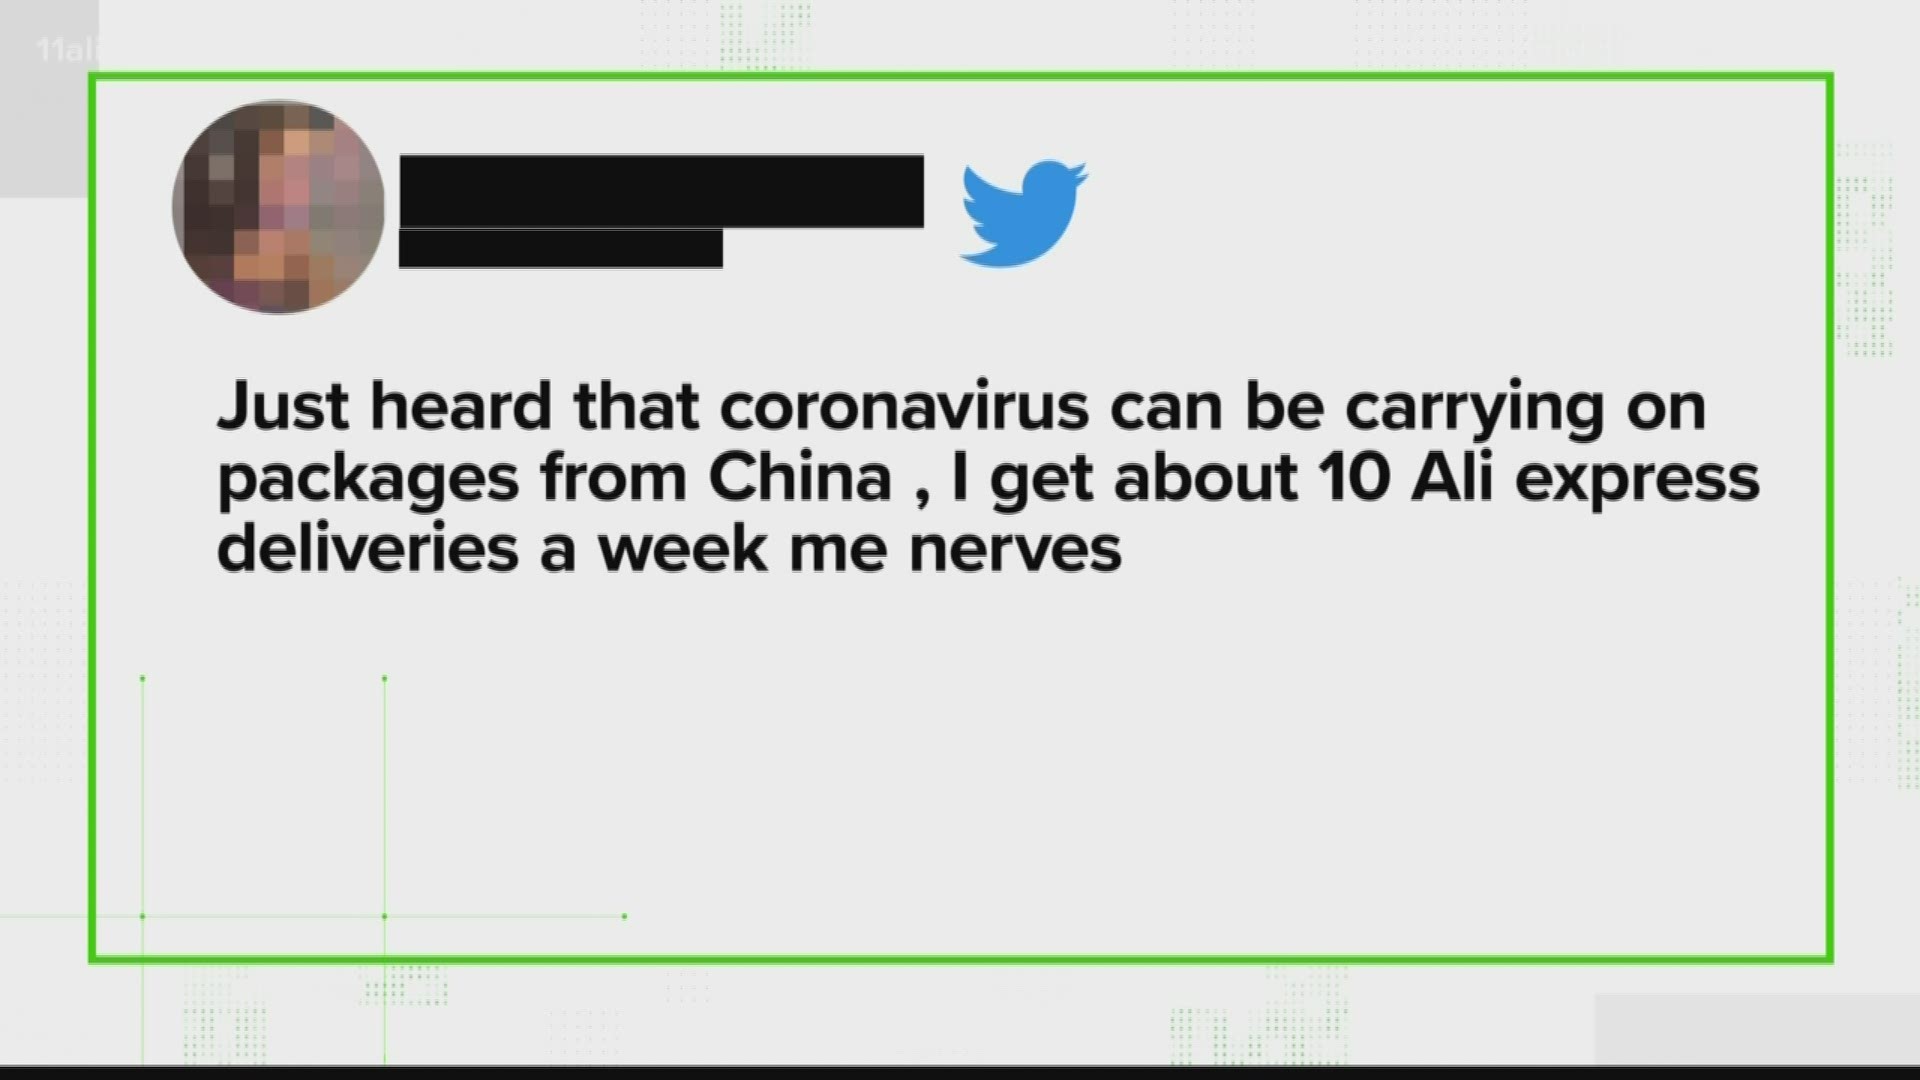 We verify that viral claim about coronavirus.